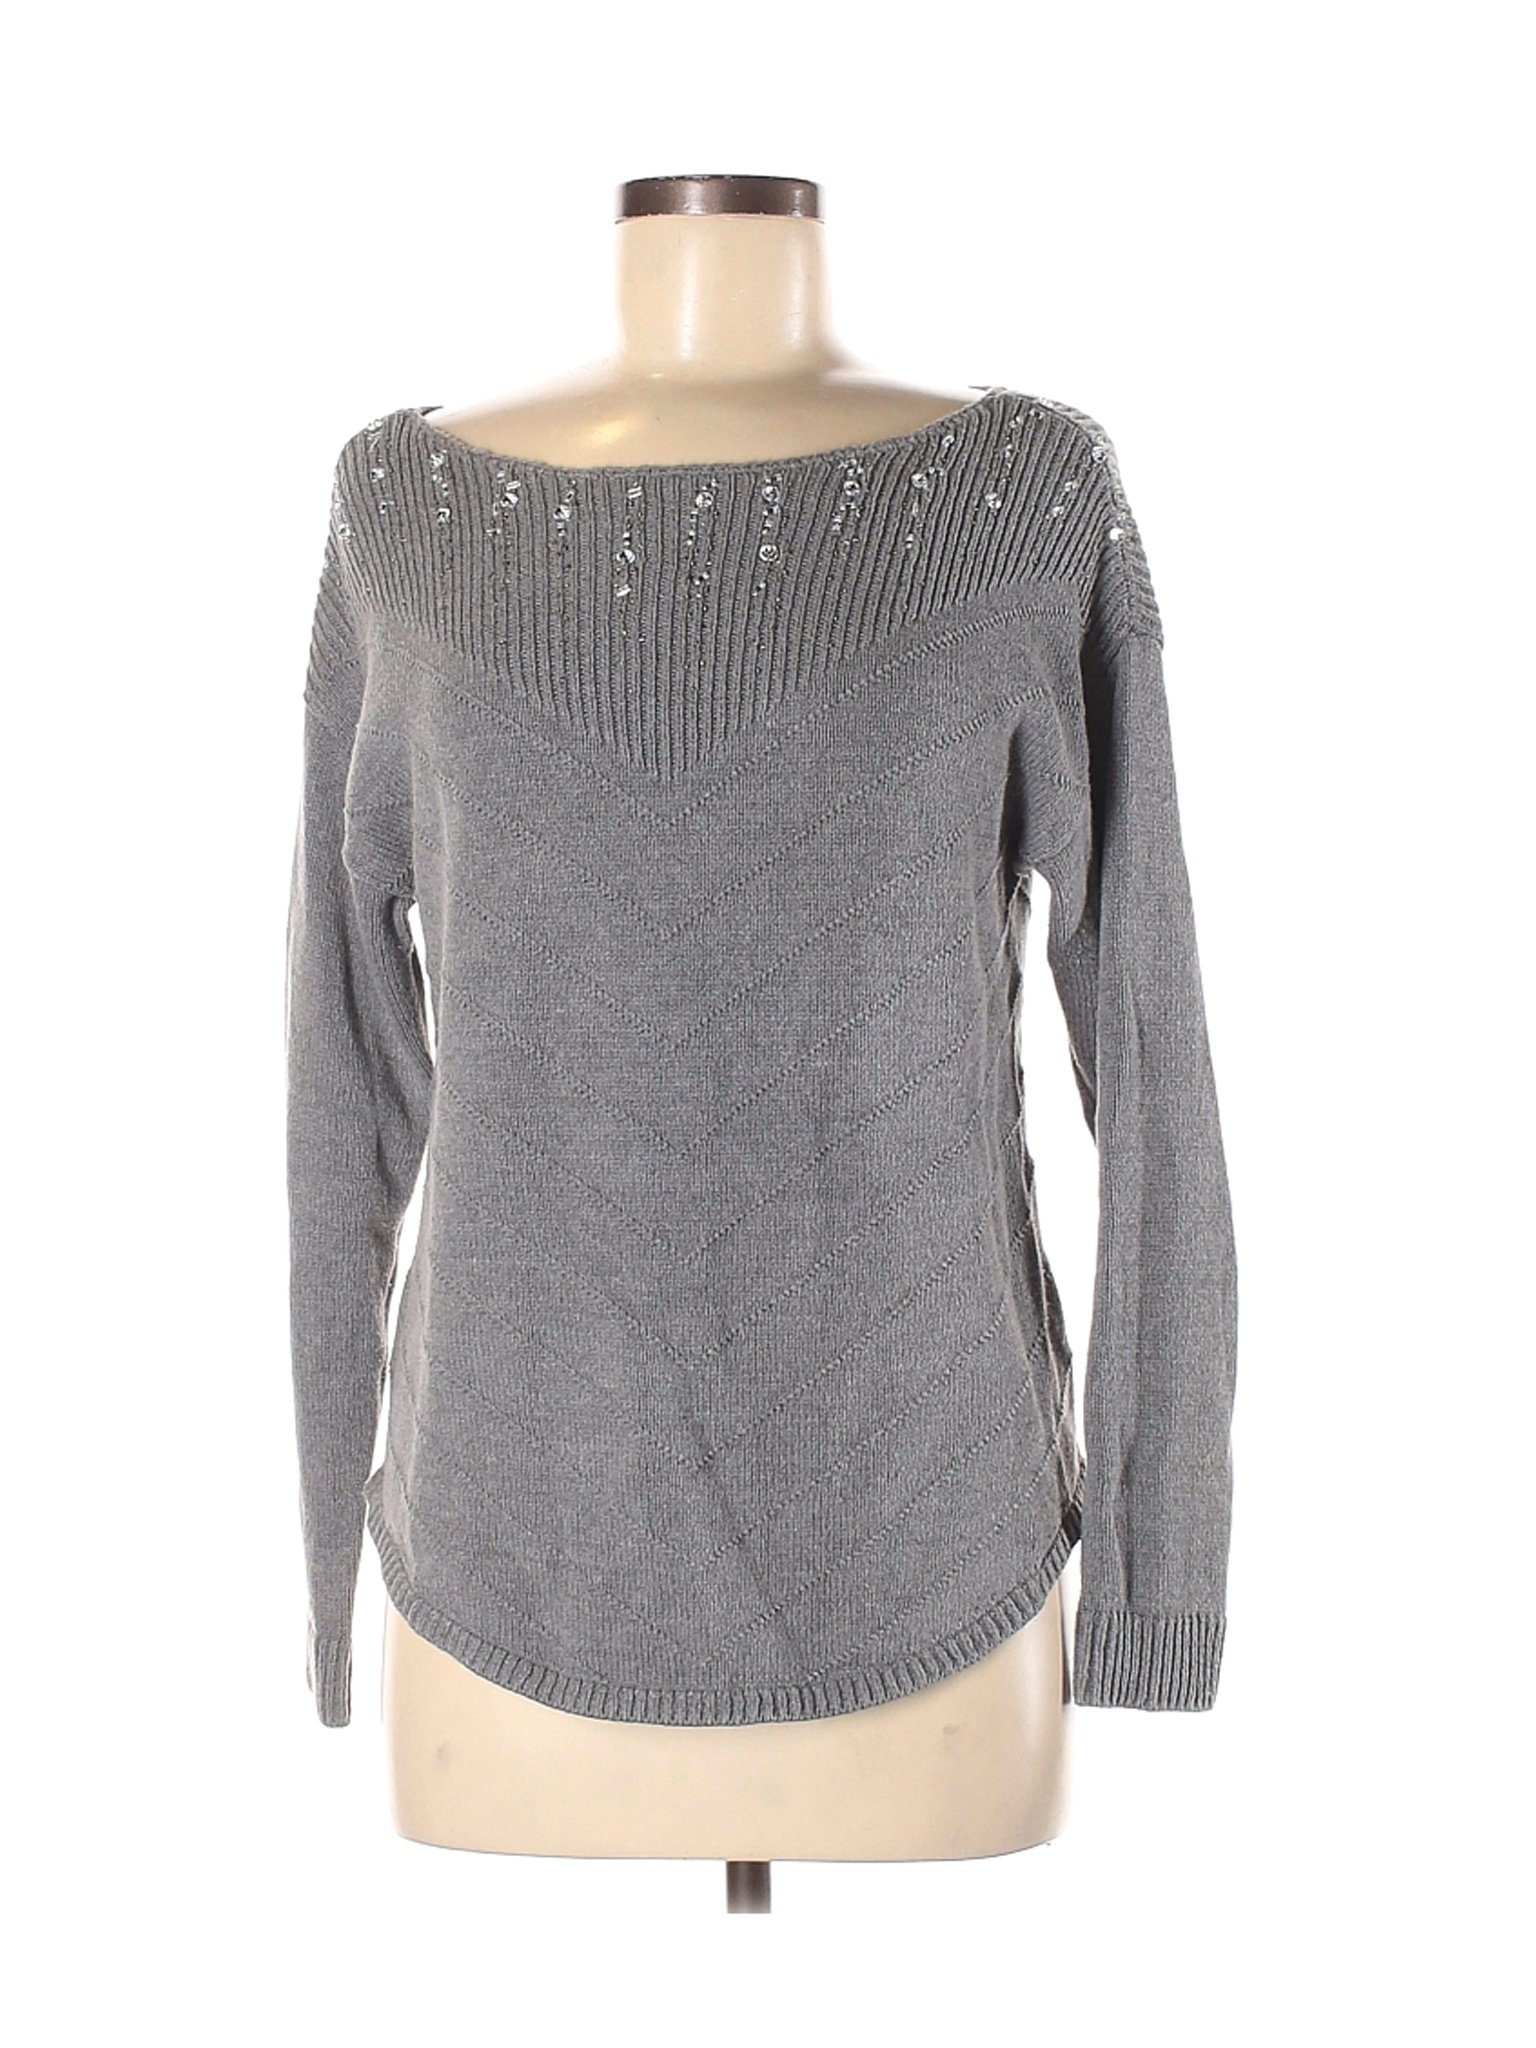 New York & Company Women Gray Pullover Sweater M | eBay